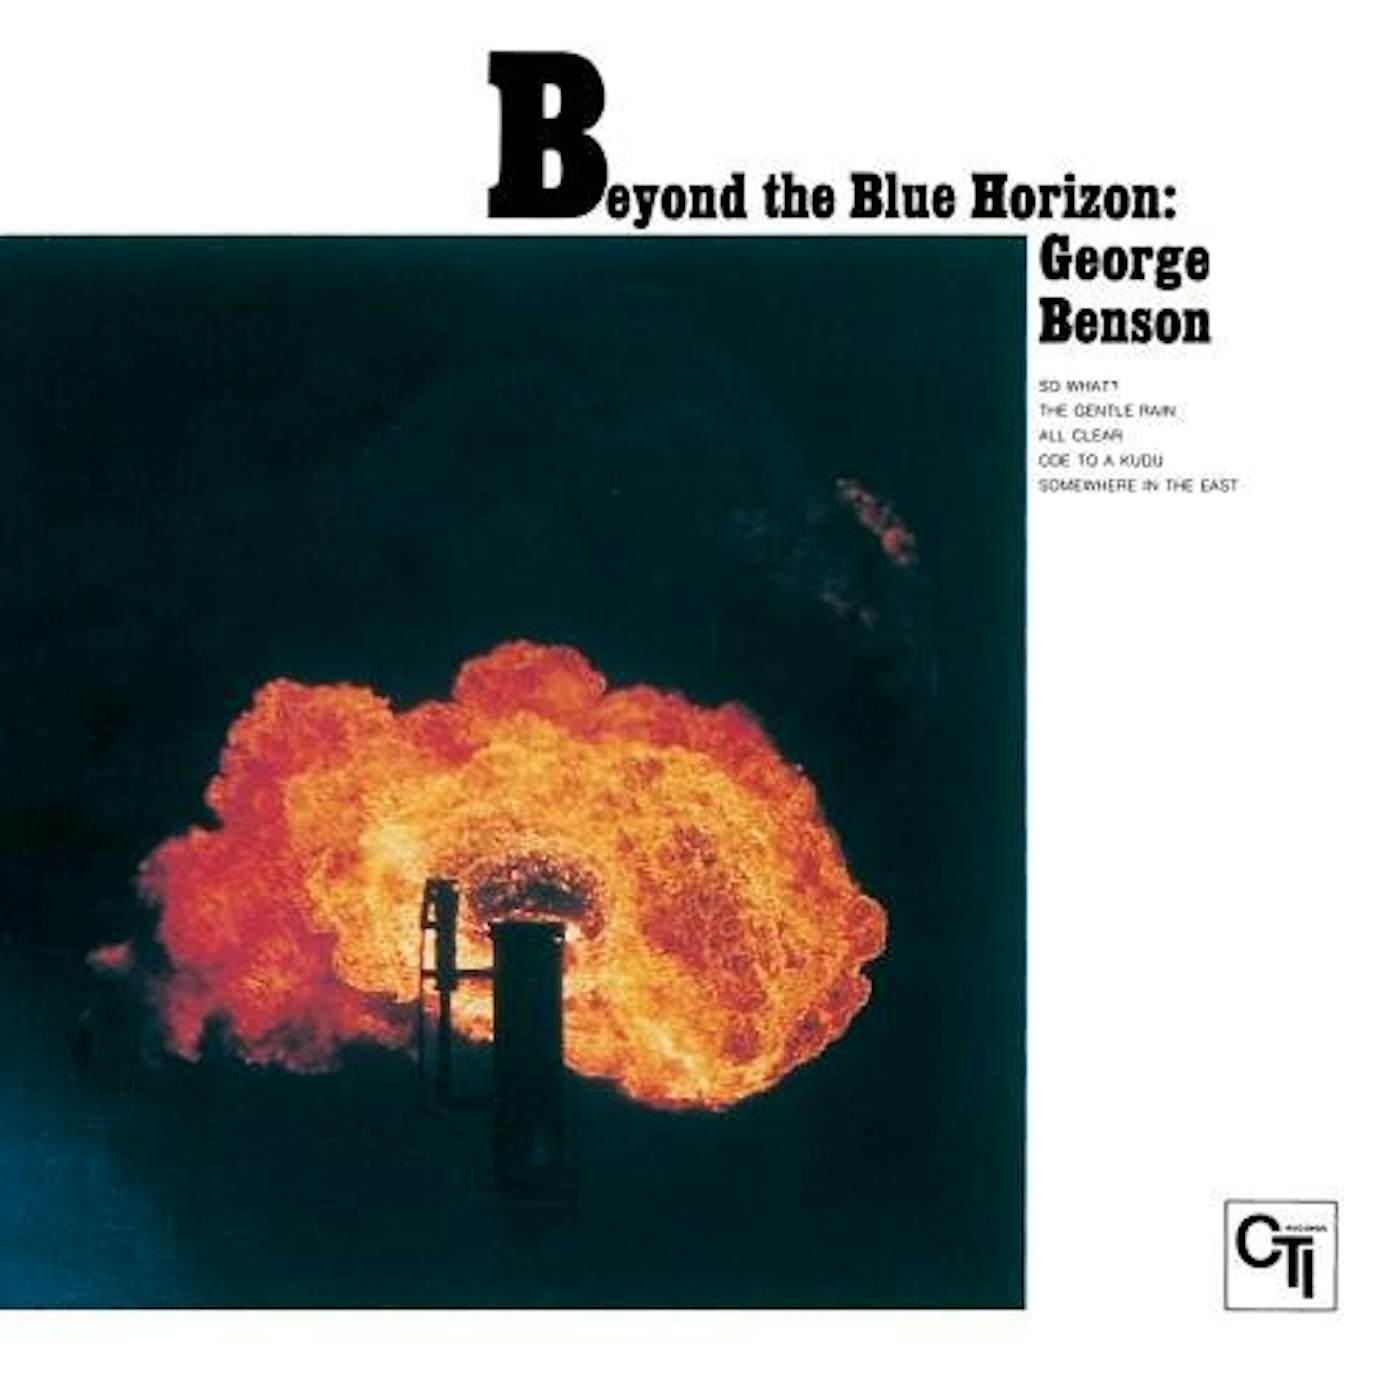 George Benson BEYOND THE BLUE HORIZON CD